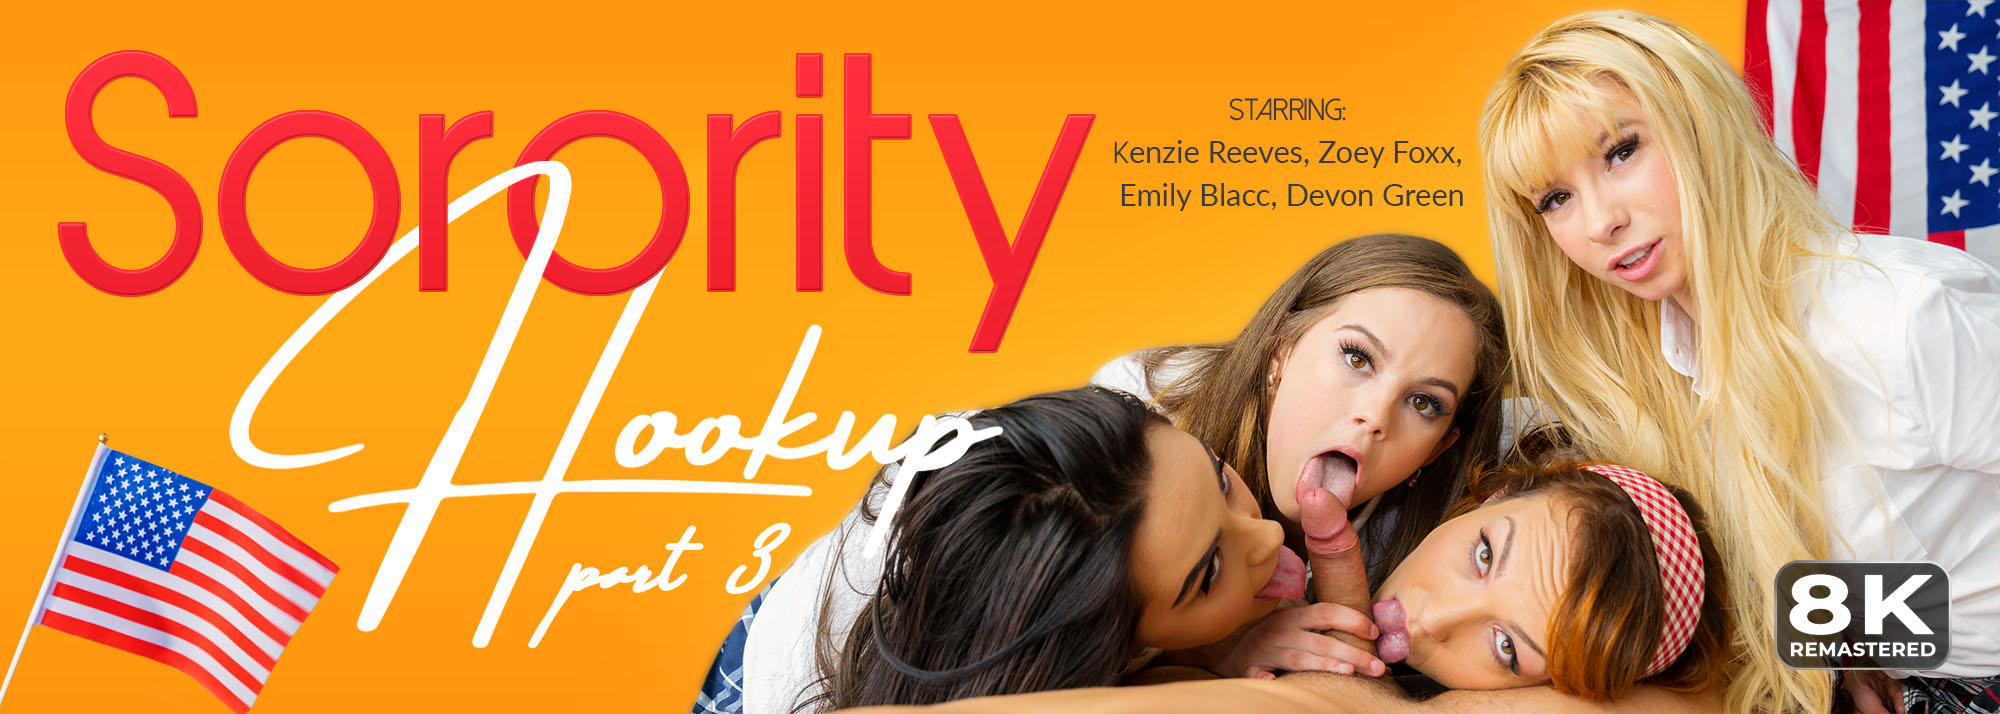 Sorority Hookup Part 3 (Remastered) - VR Porn Video, Starring: Emily Blacc, Zoey Foxx, Devon Green, Kenzie Reeves